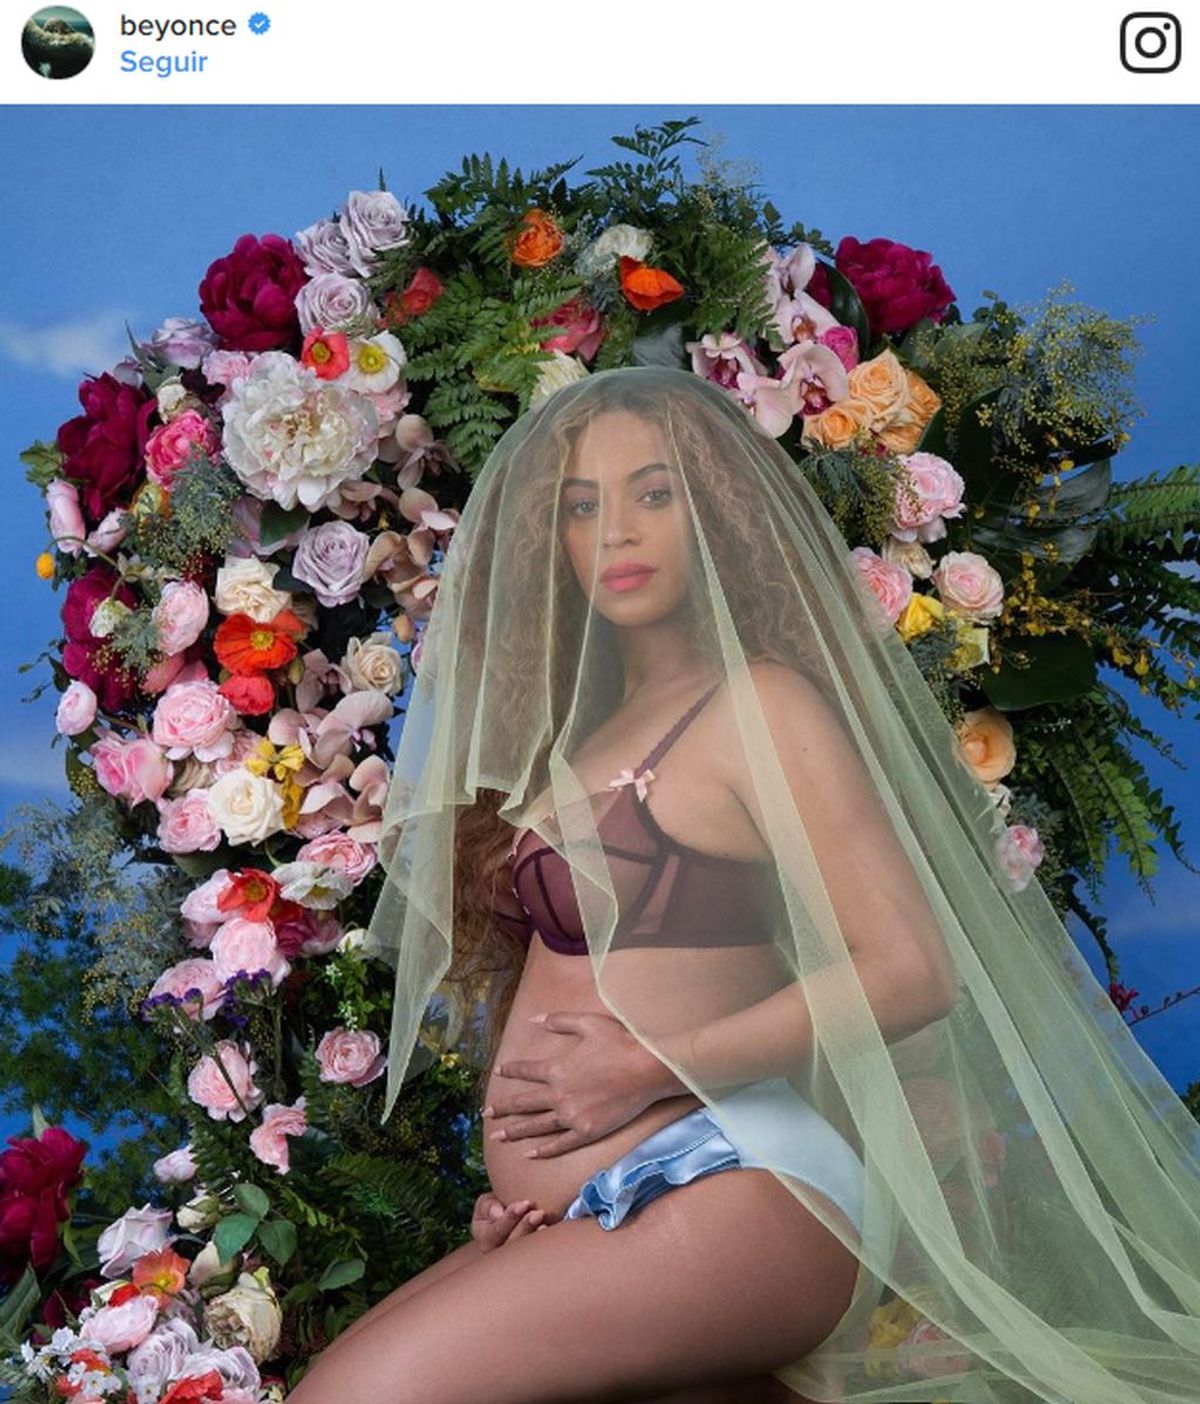 Beyoncé anuncia feliz que va a ser madre de gemelos: "Hemos sido bendecidos dos veces"